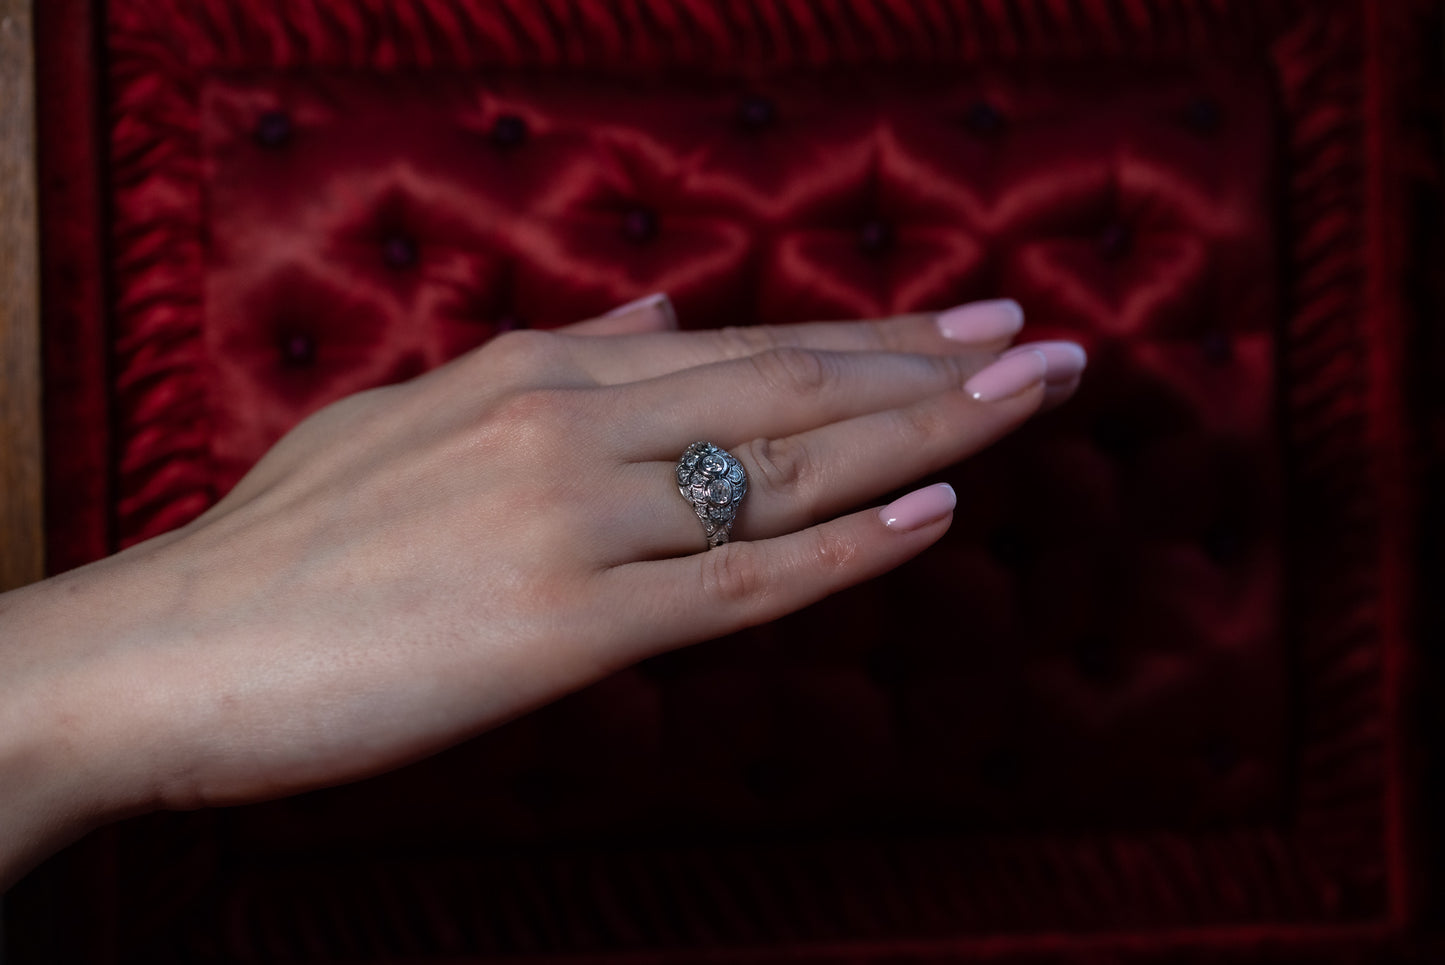 Art Deco Diamond Trilogy Ring